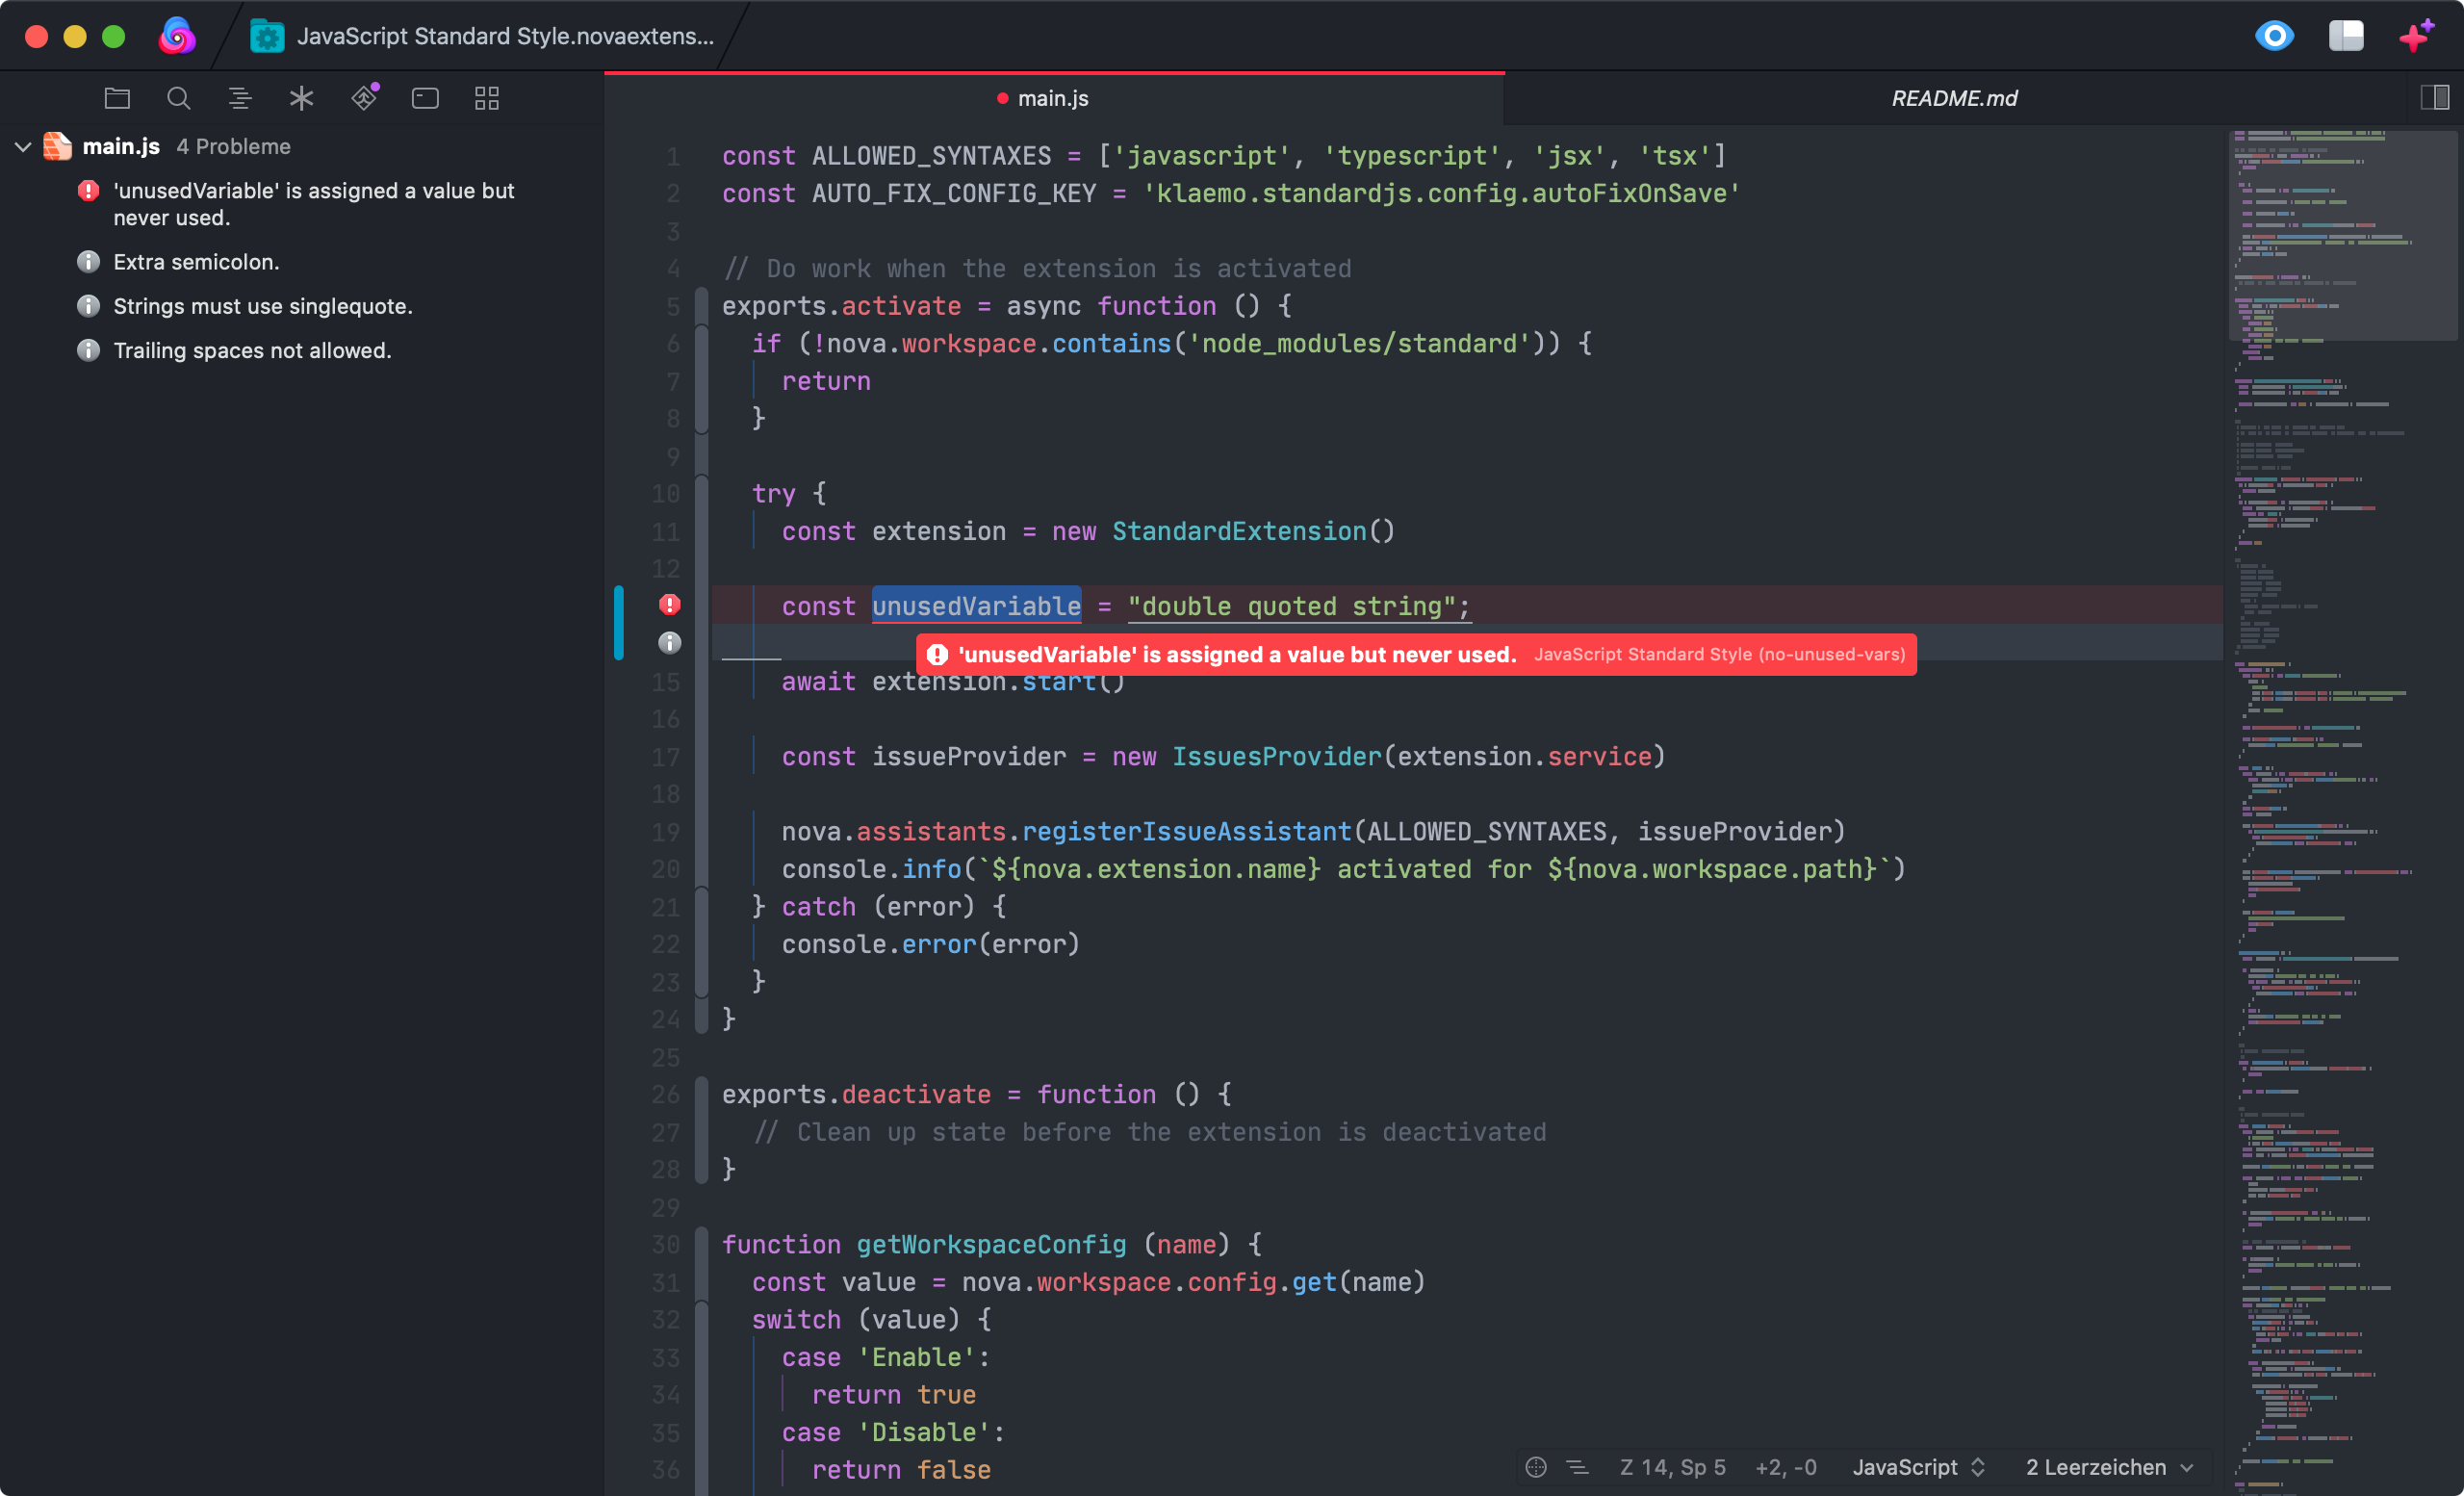 Screenshot of Nova.app running the JavaScript Standard Style extension